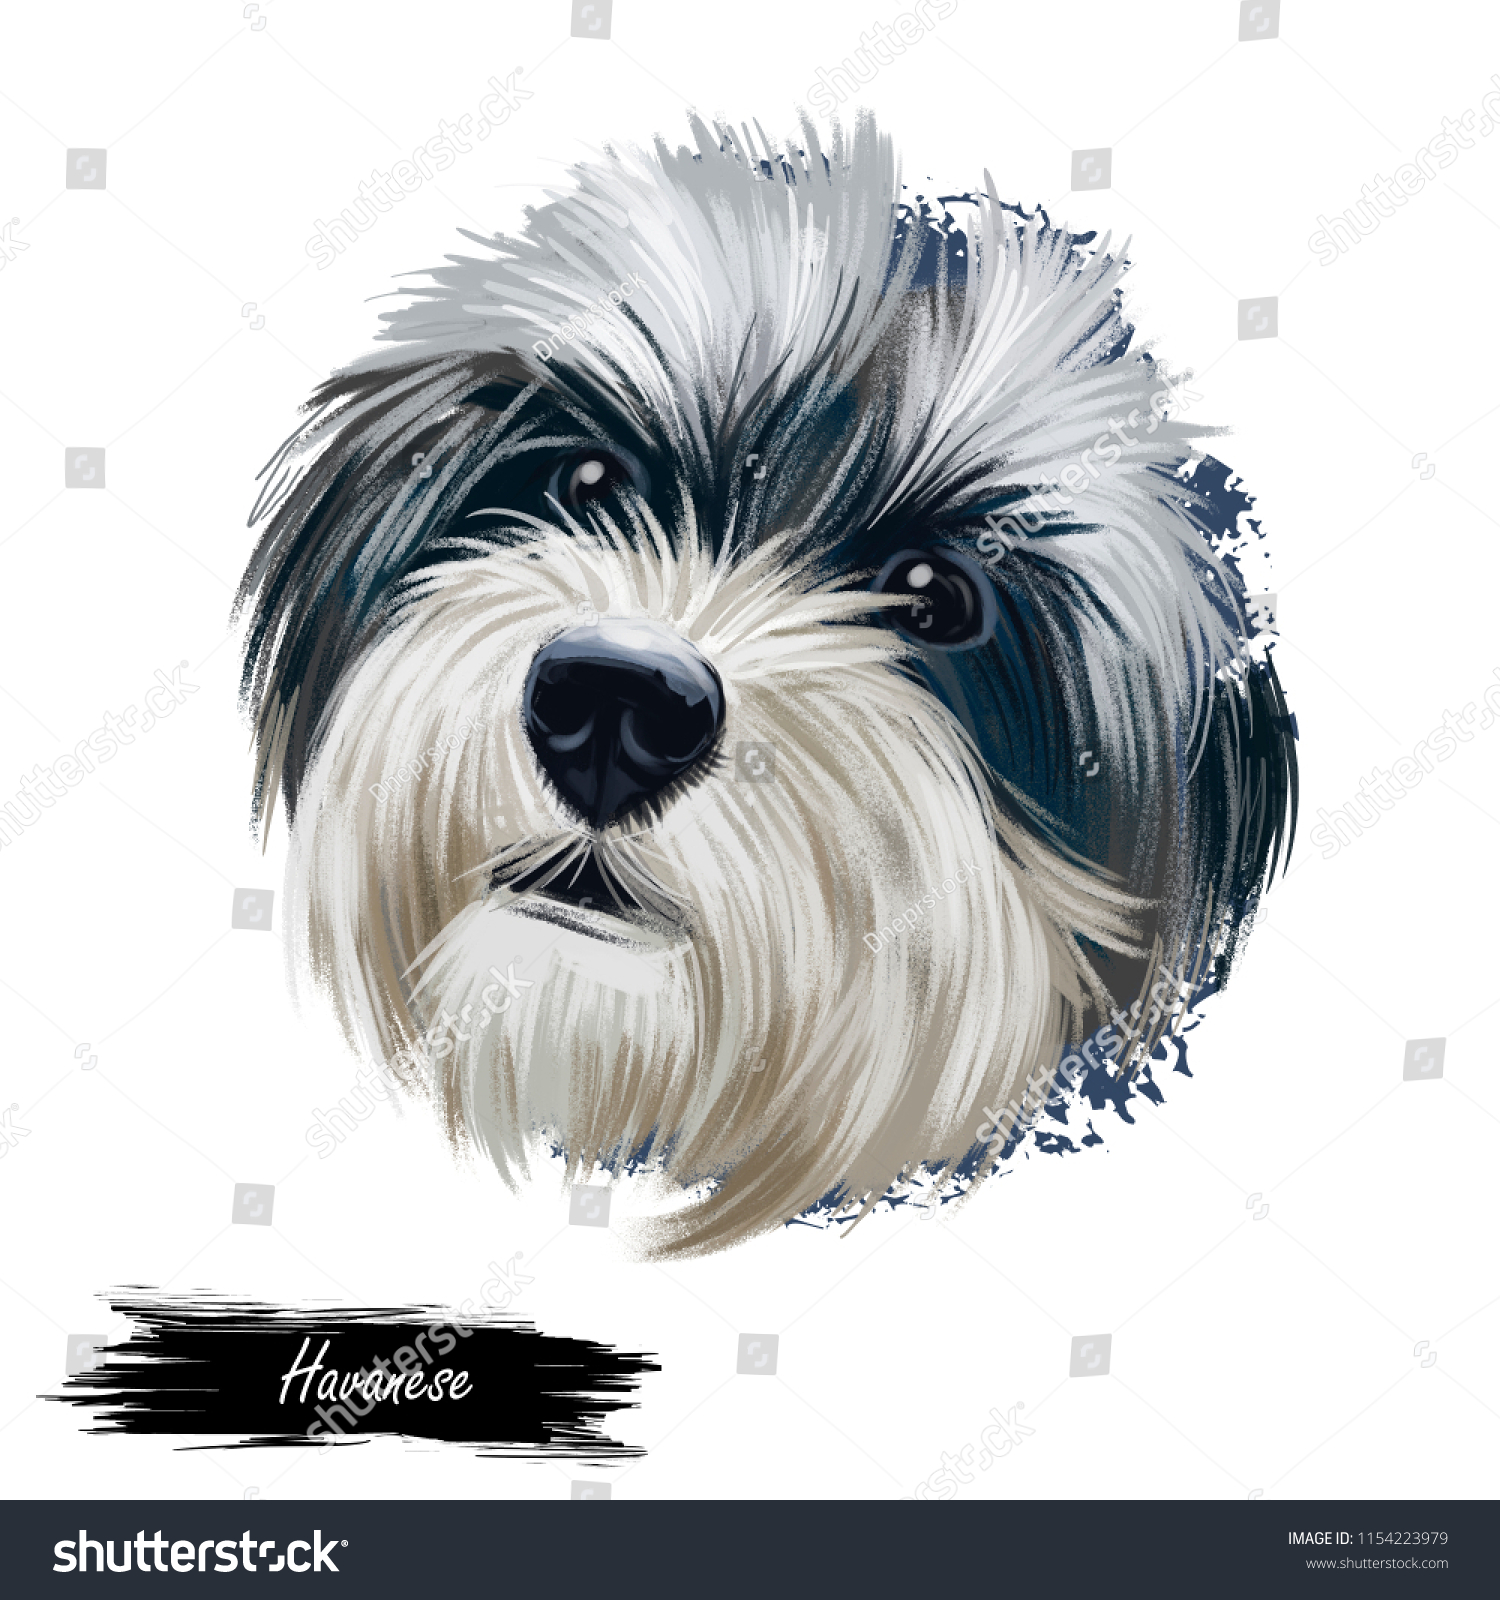 Havanese Havanese Cuban Bichon Havaneser Dog Stock Illustration 1154223979